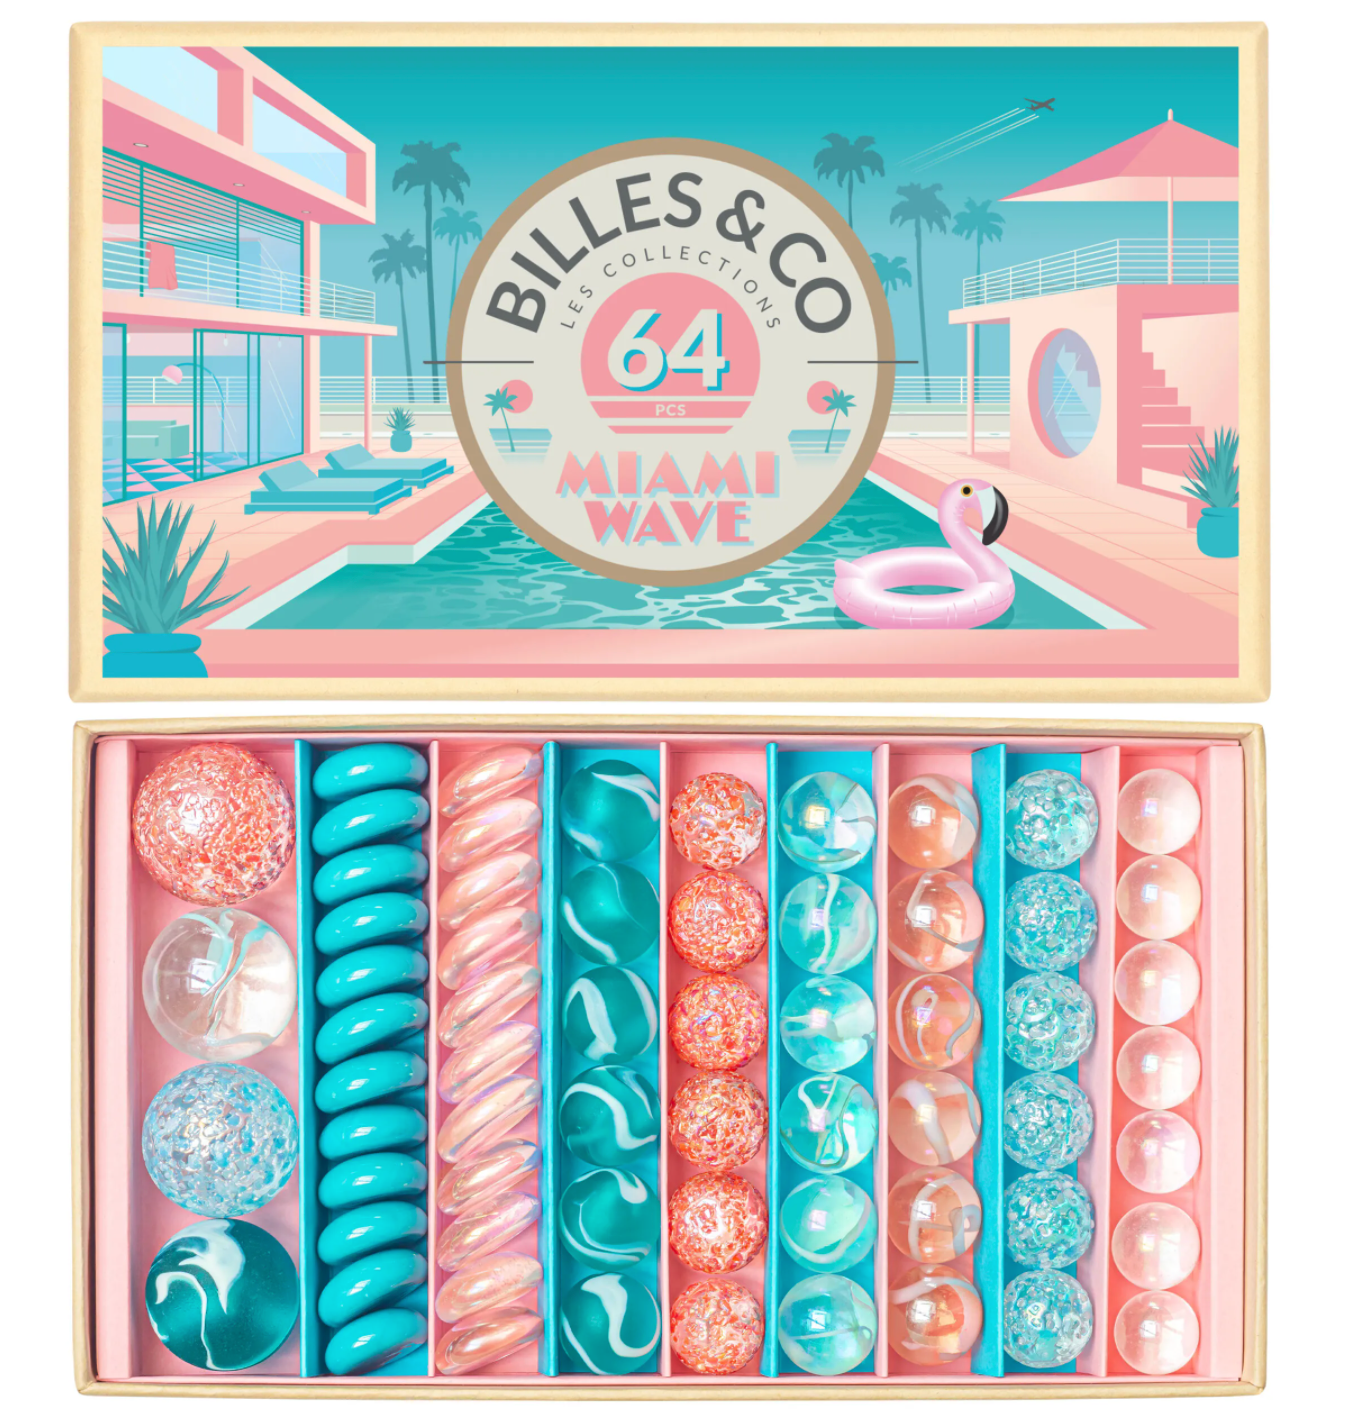 Billes & Co Miami Wave (64 pieces)